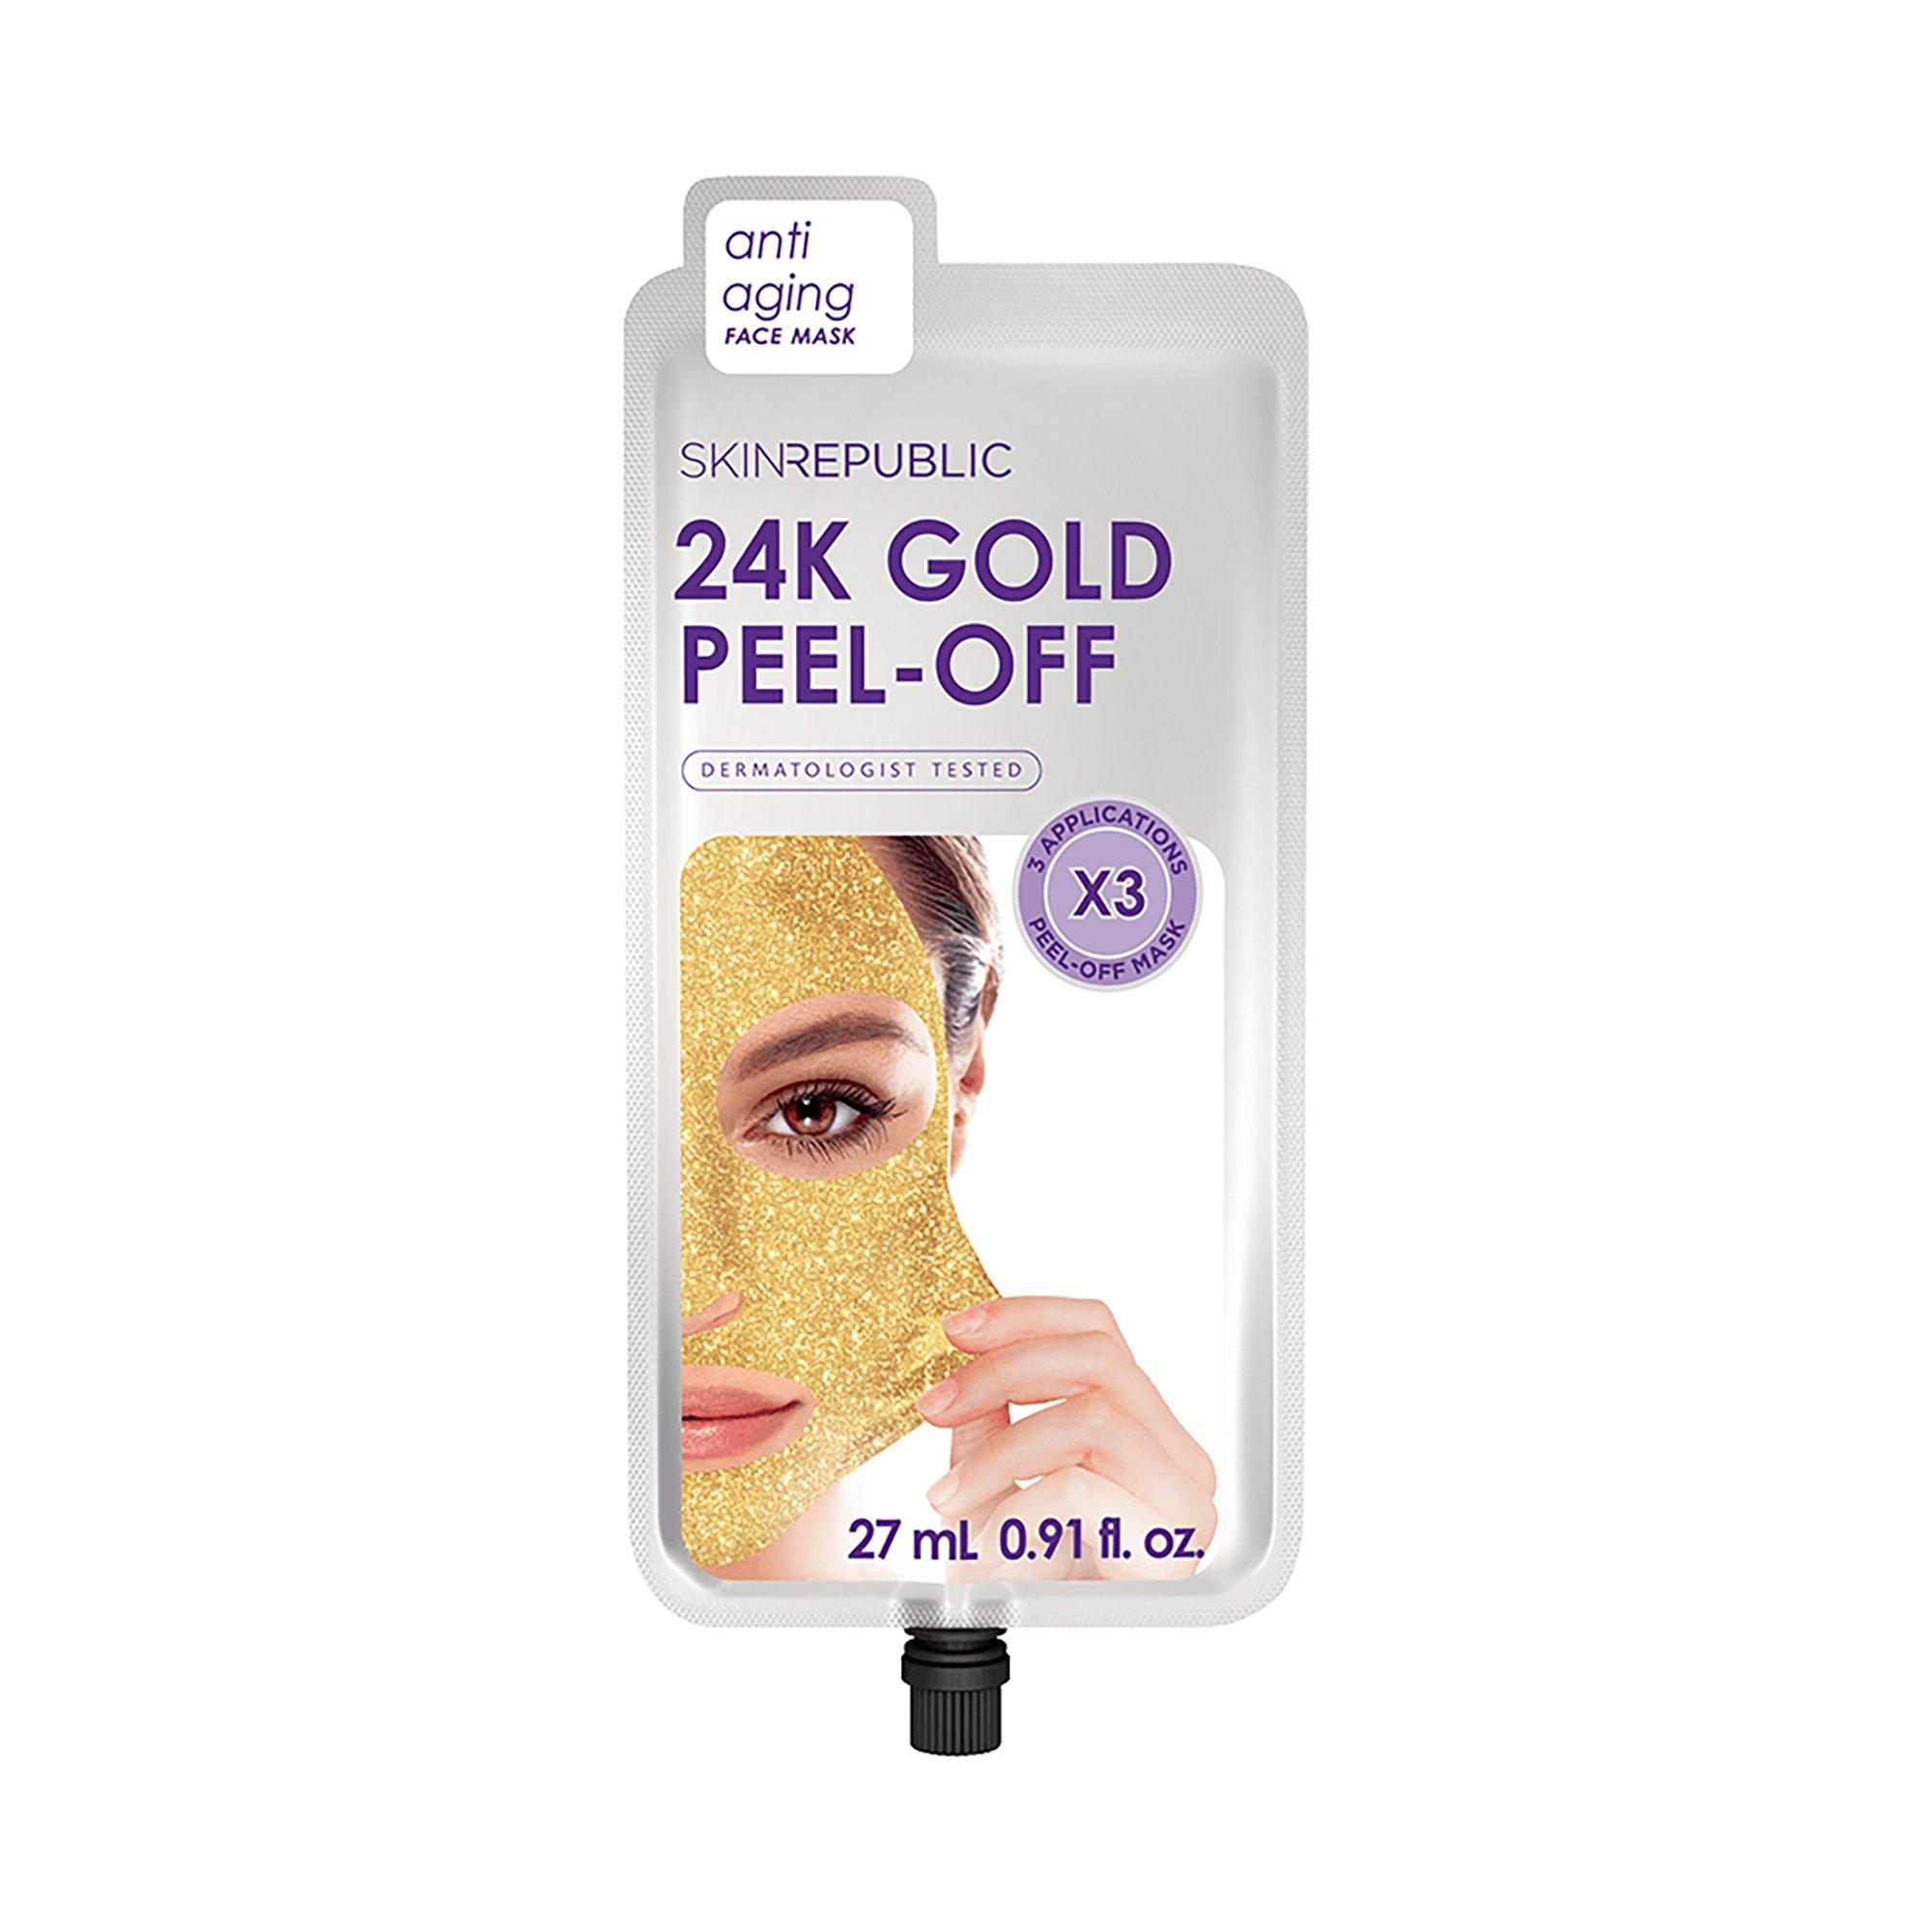 Image of Skin republic 24K Gold Peel-Off Face Mask - 27ML